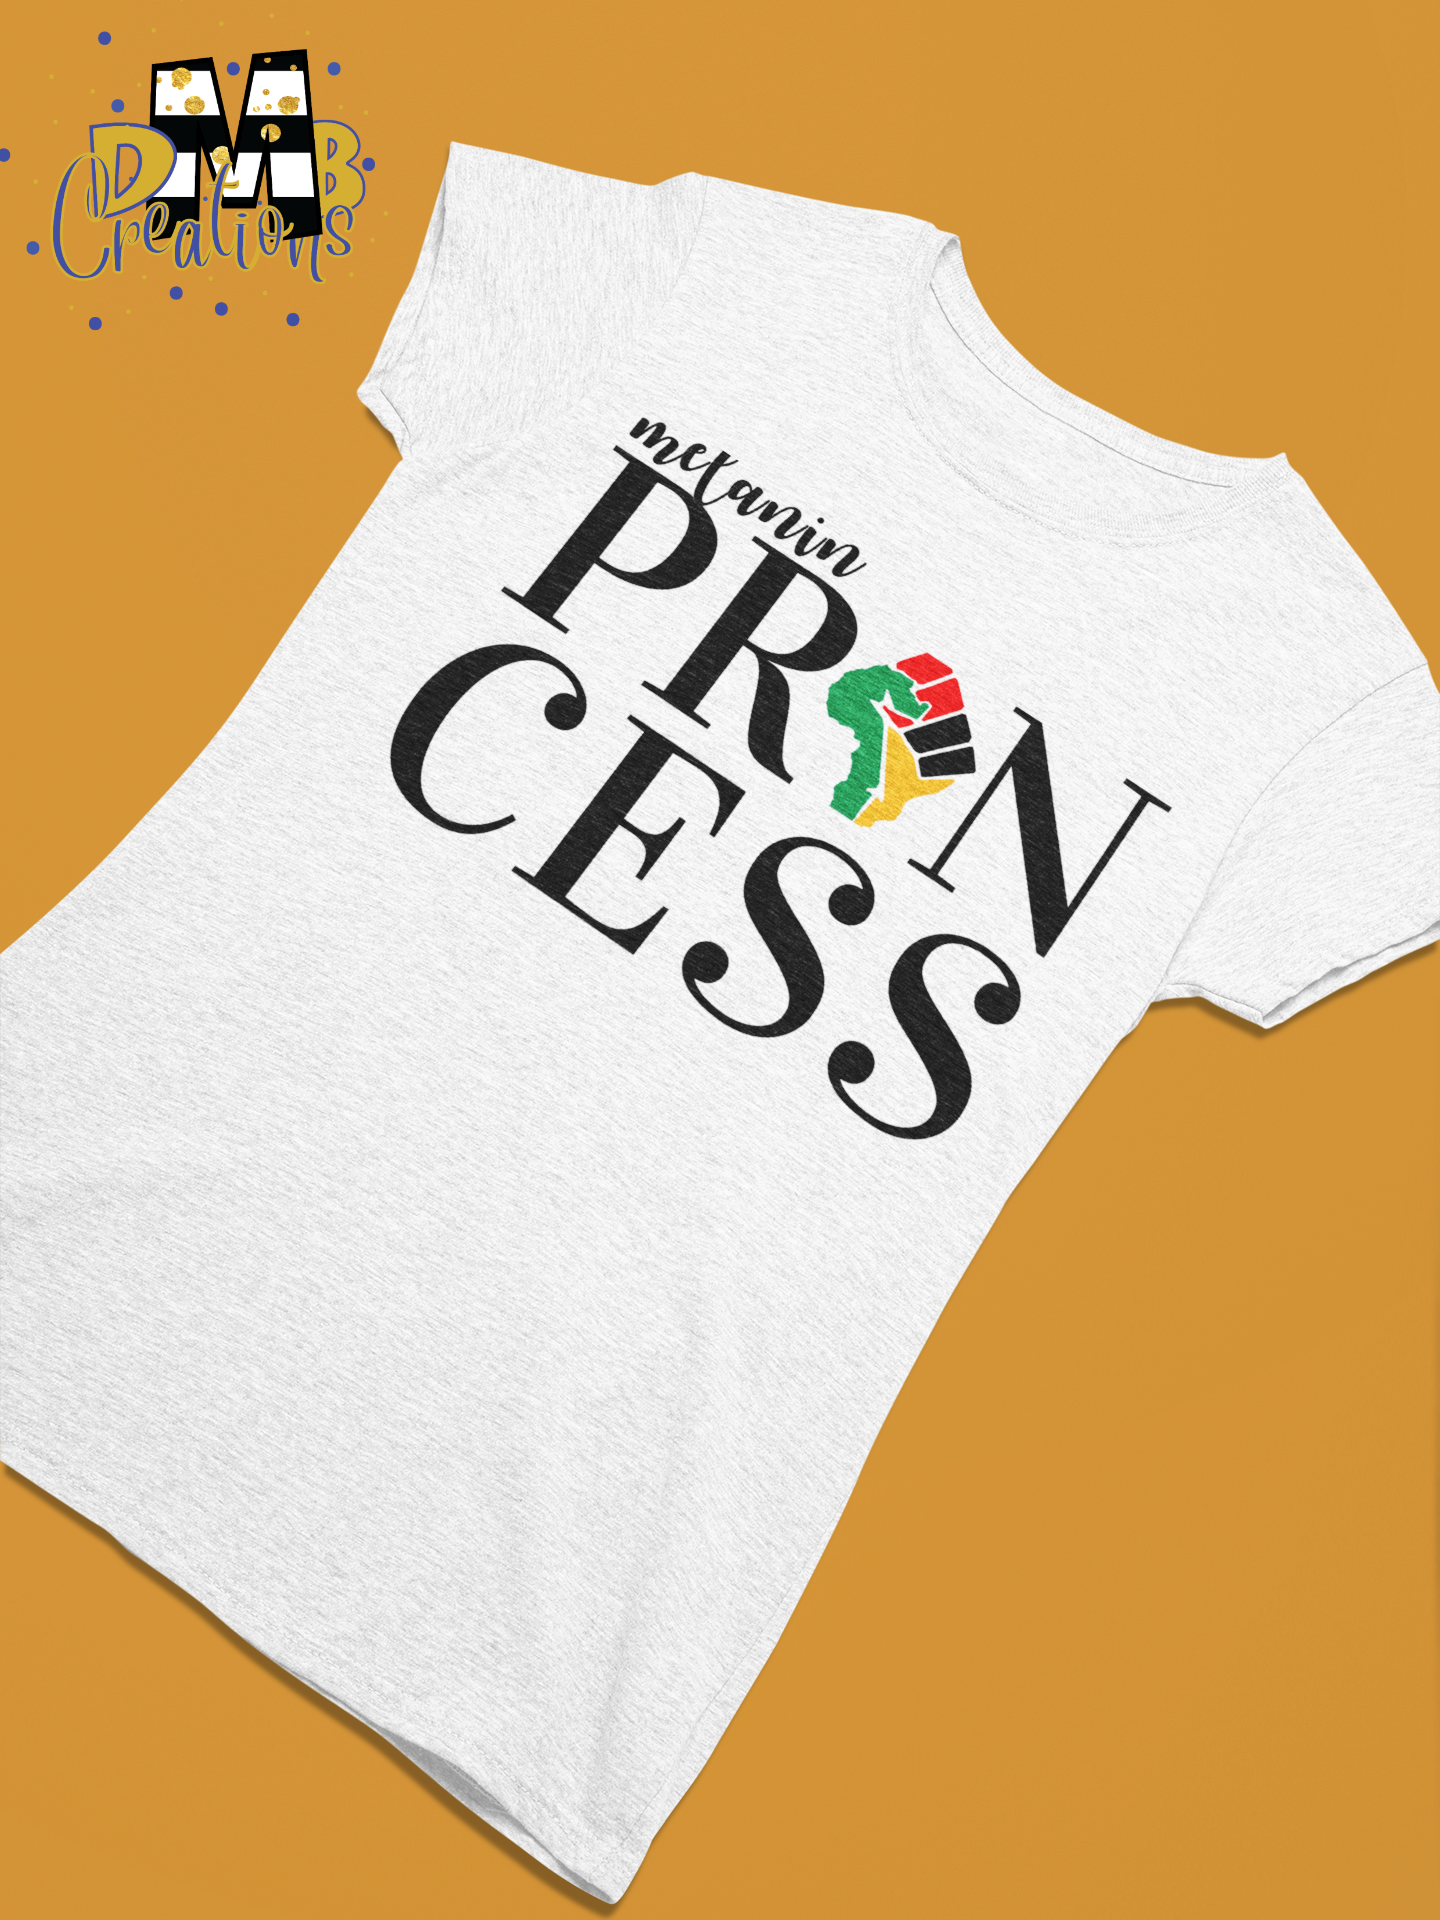 Melanin Princess T-shirt